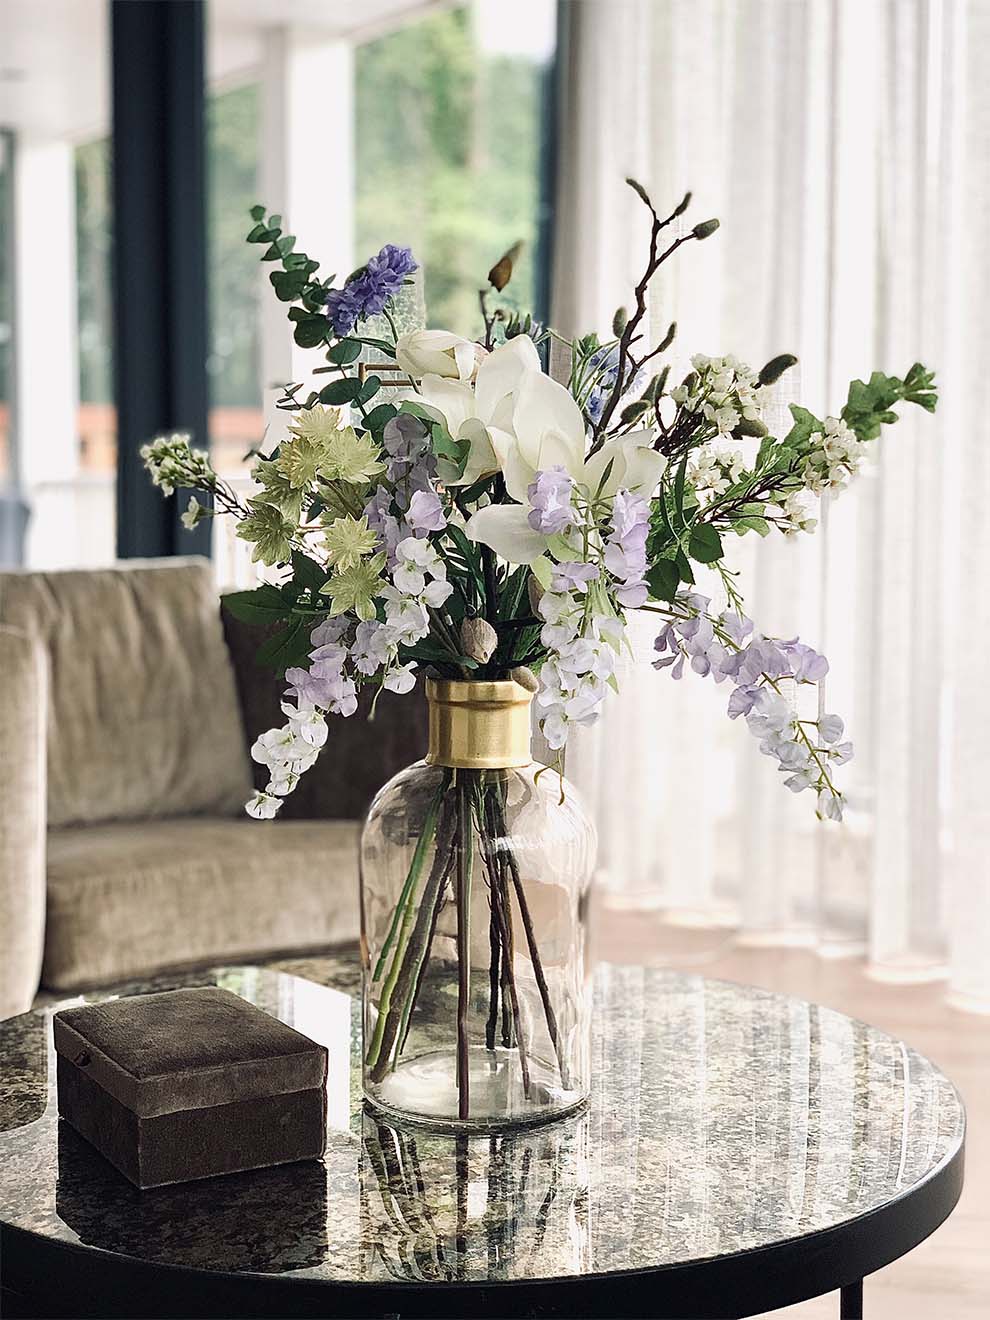 Purple flowers in a glass vase